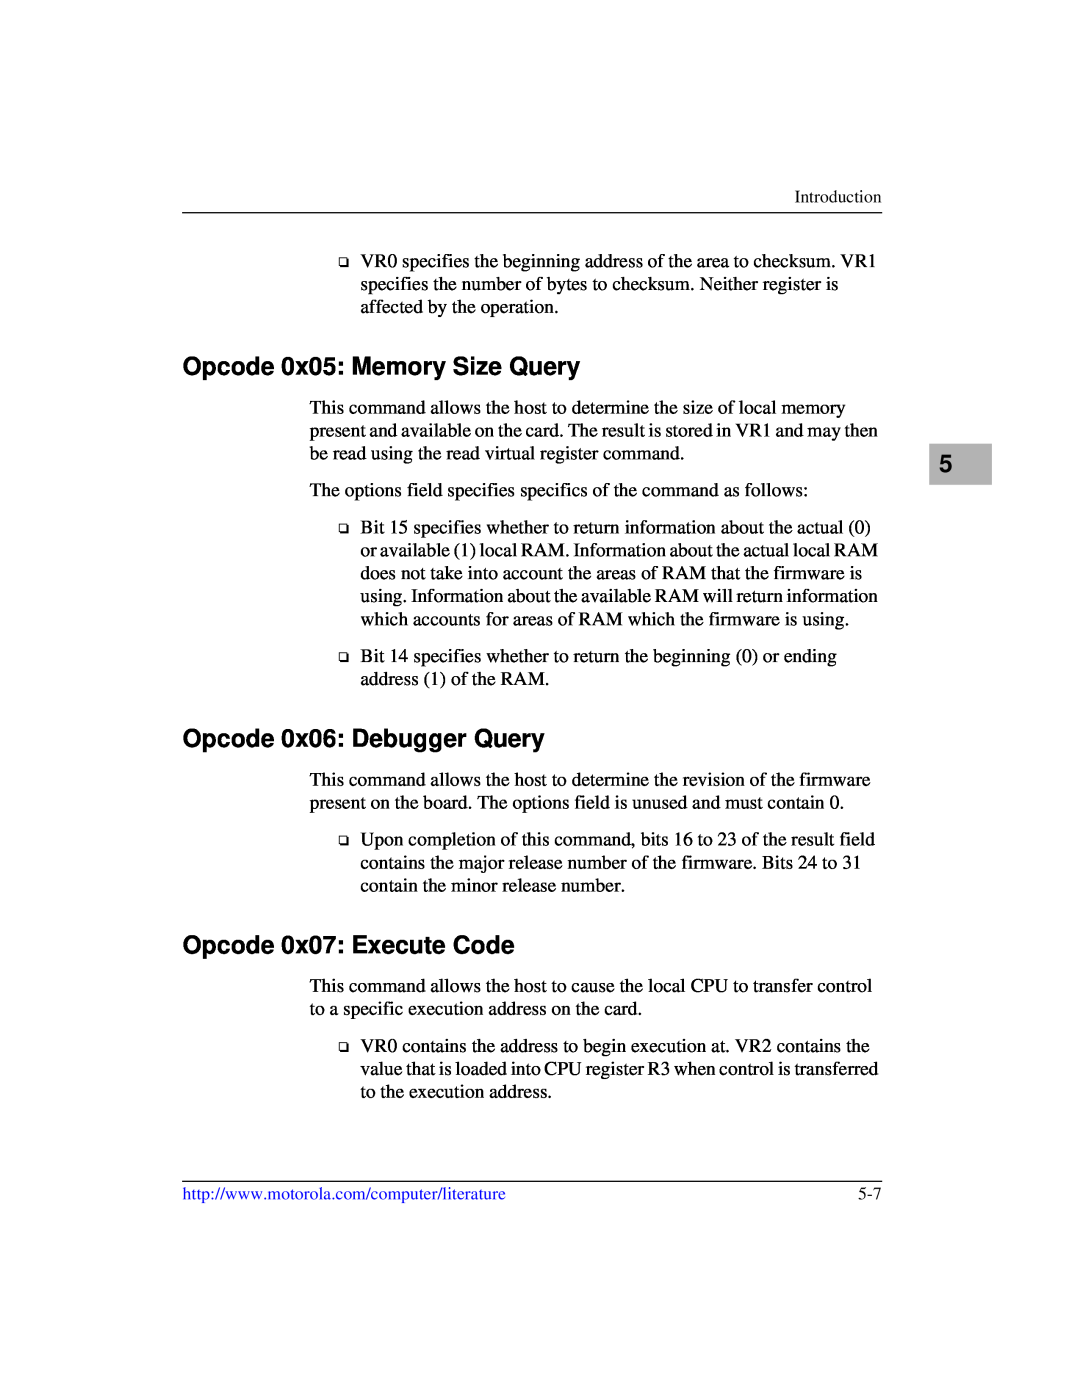 Motorola IH5, MCPN750A manual Opcode 0x05 Memory Size Query, Opcode 0x06 Debugger Query, Opcode 0x07 Execute Code 